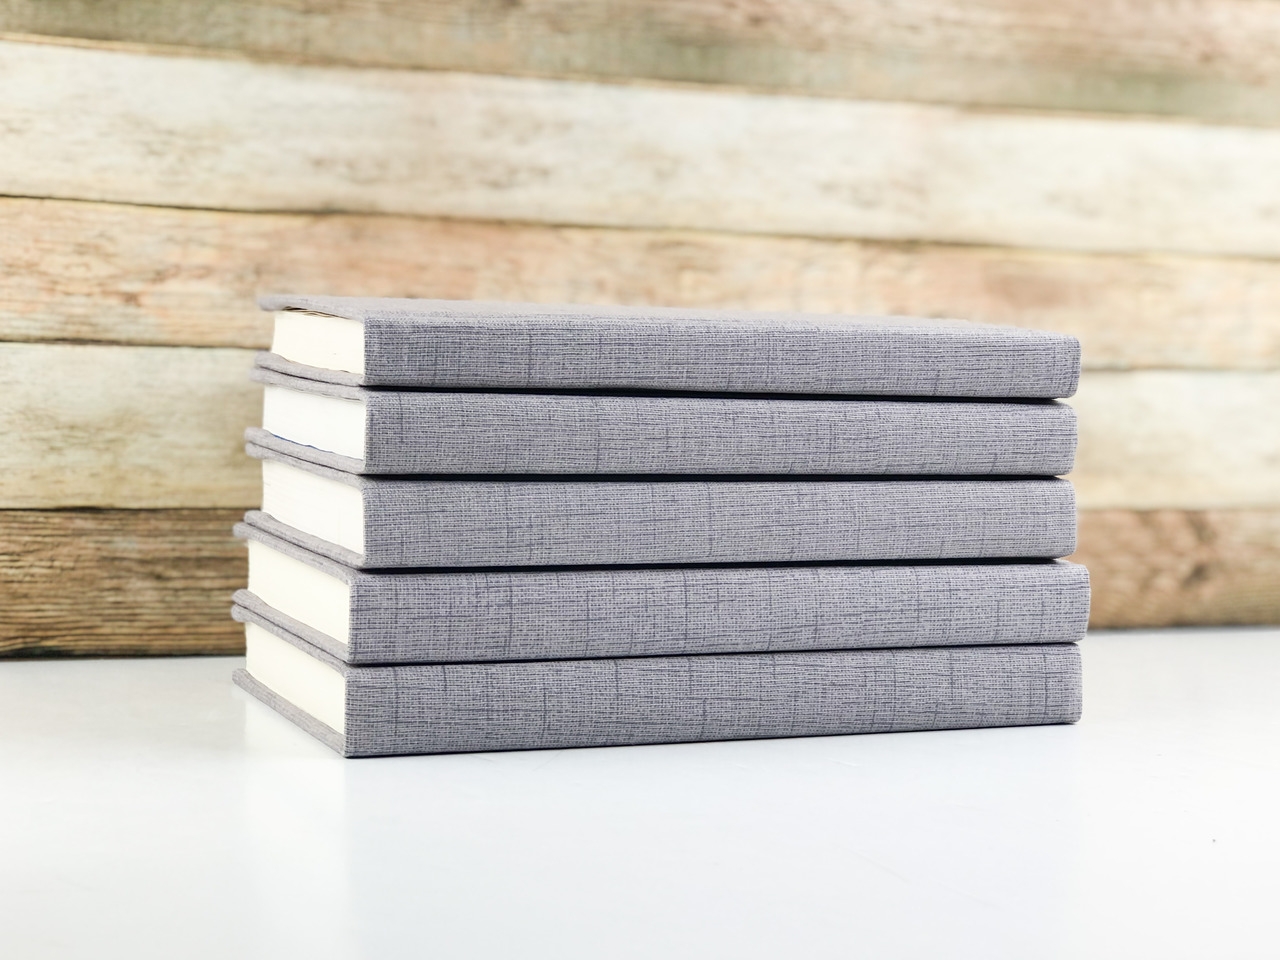 Decorative Books, Textured Gray, Set of 5 - Image 1